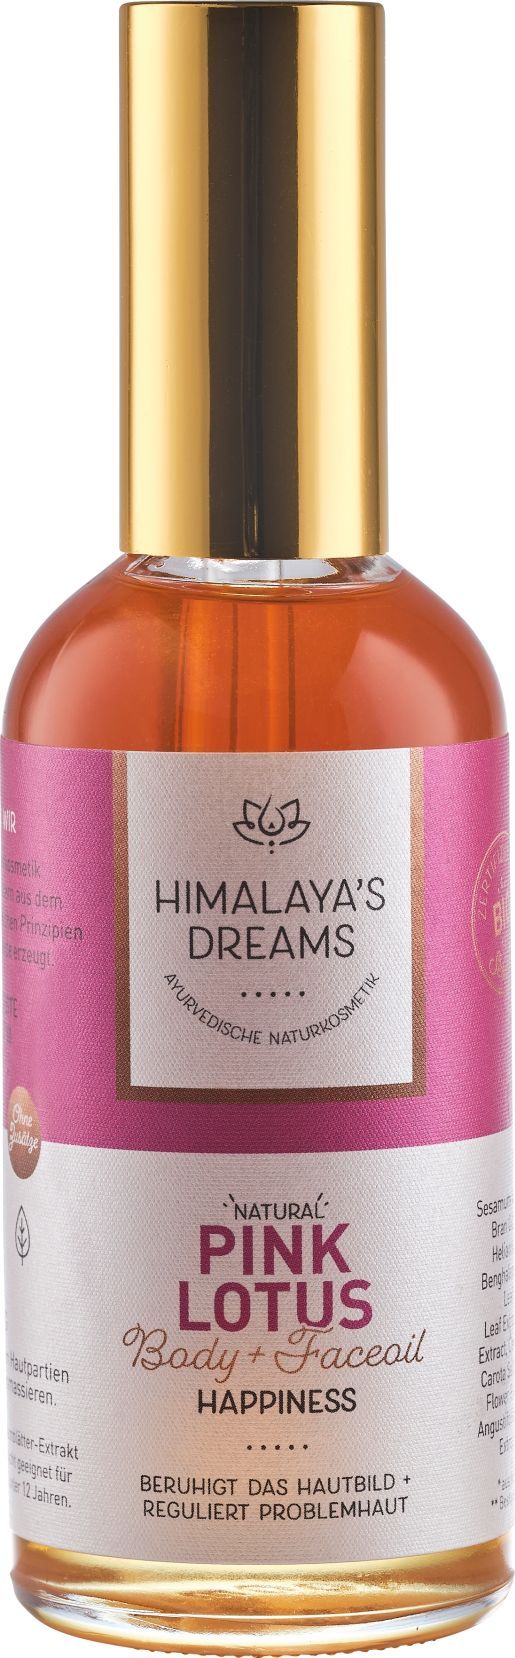 Himalaya's Dreams Ayurveda Pink Lotus Body & Face Oil